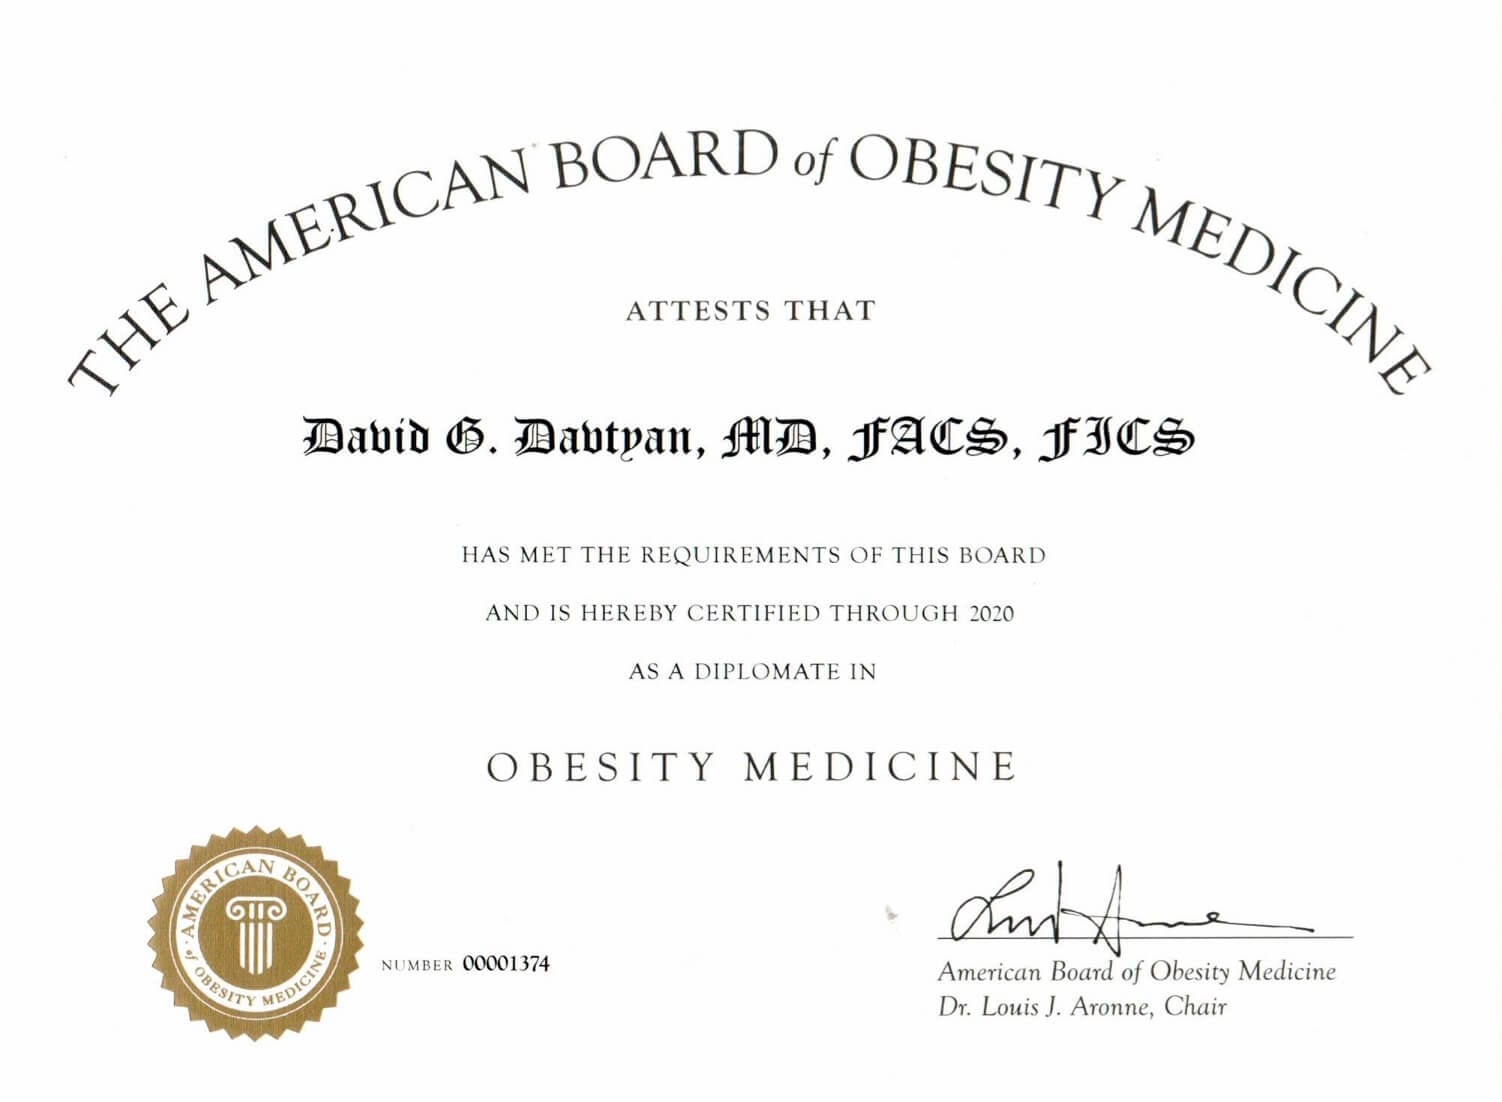 Dr. David G. Davtyan's 2019 American Board of Obesity Medicine Diplomate Certificate 